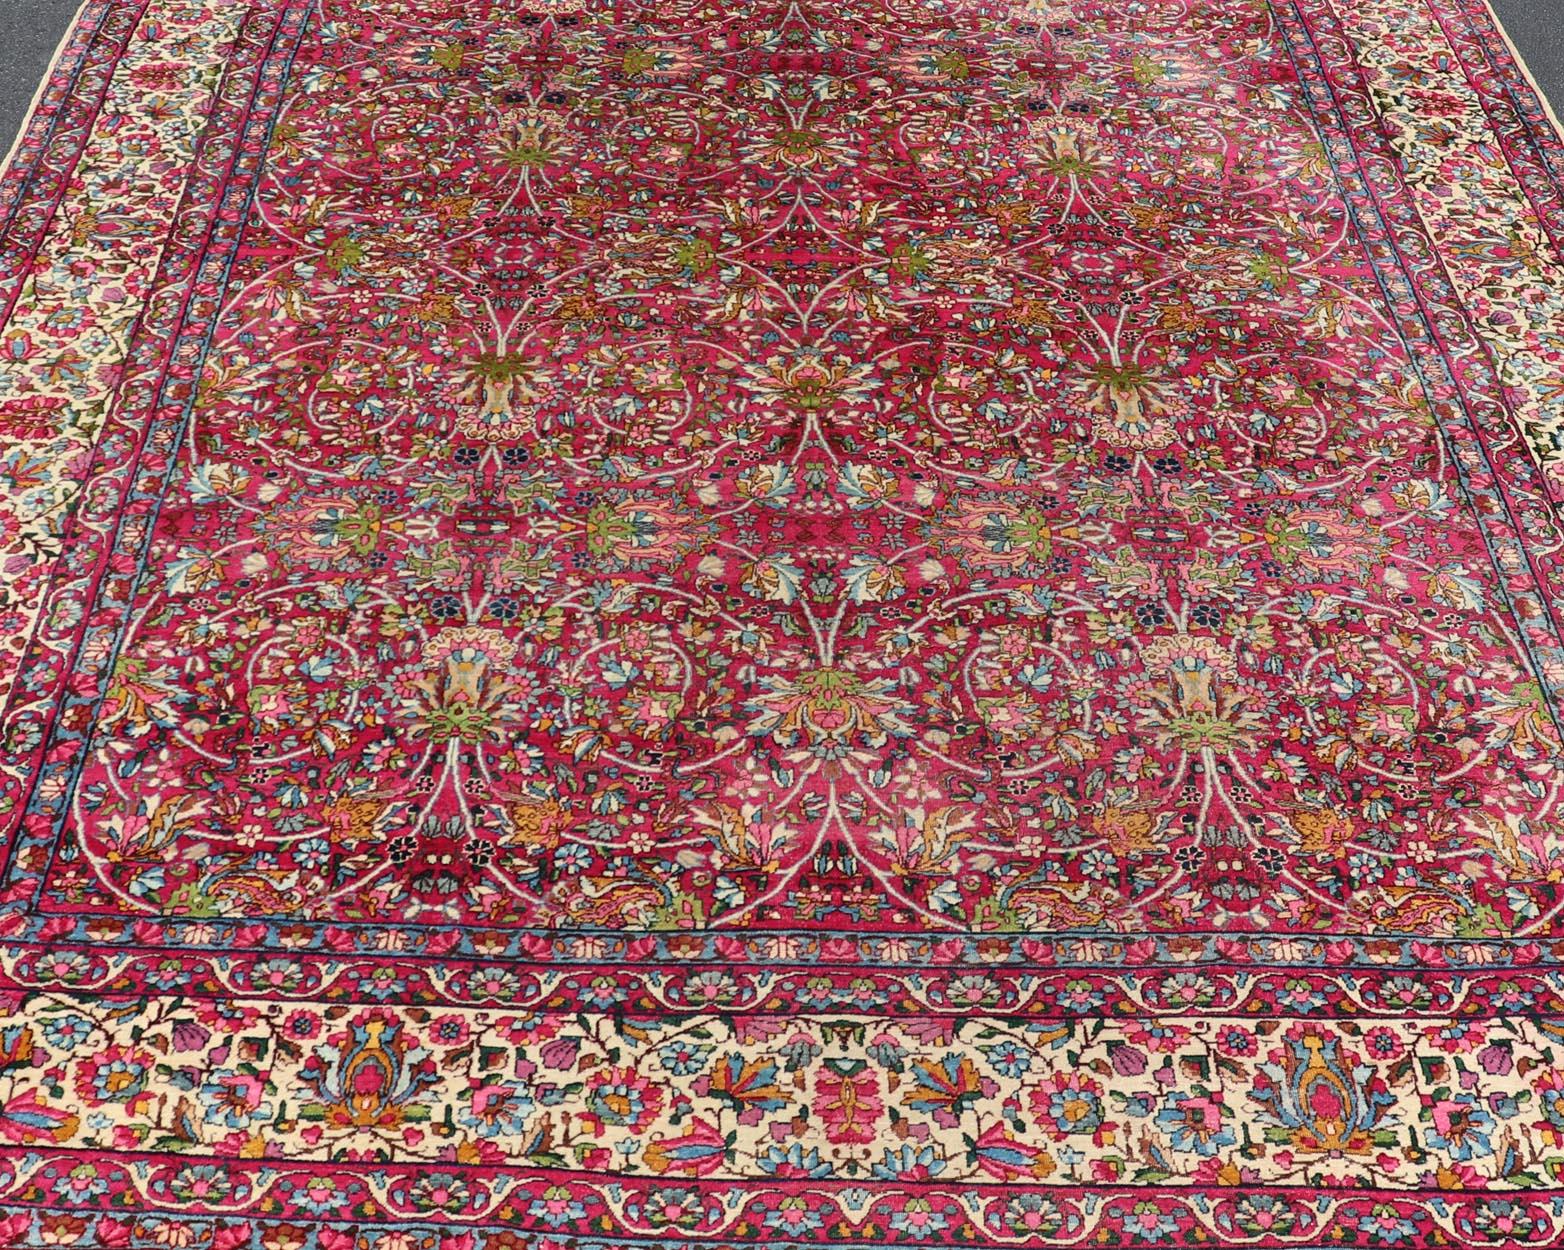  Antique Persian Lavar Kerman Rug with All-Over Floral Design In Jewel Tones. Keivan Woven Arts / rug A-0702, country of origin / type: Iran / Lavar Kerman, circa 1910
Measures: 9' x 12'.
This exquisite antique Lavar Kerman carpet originates from